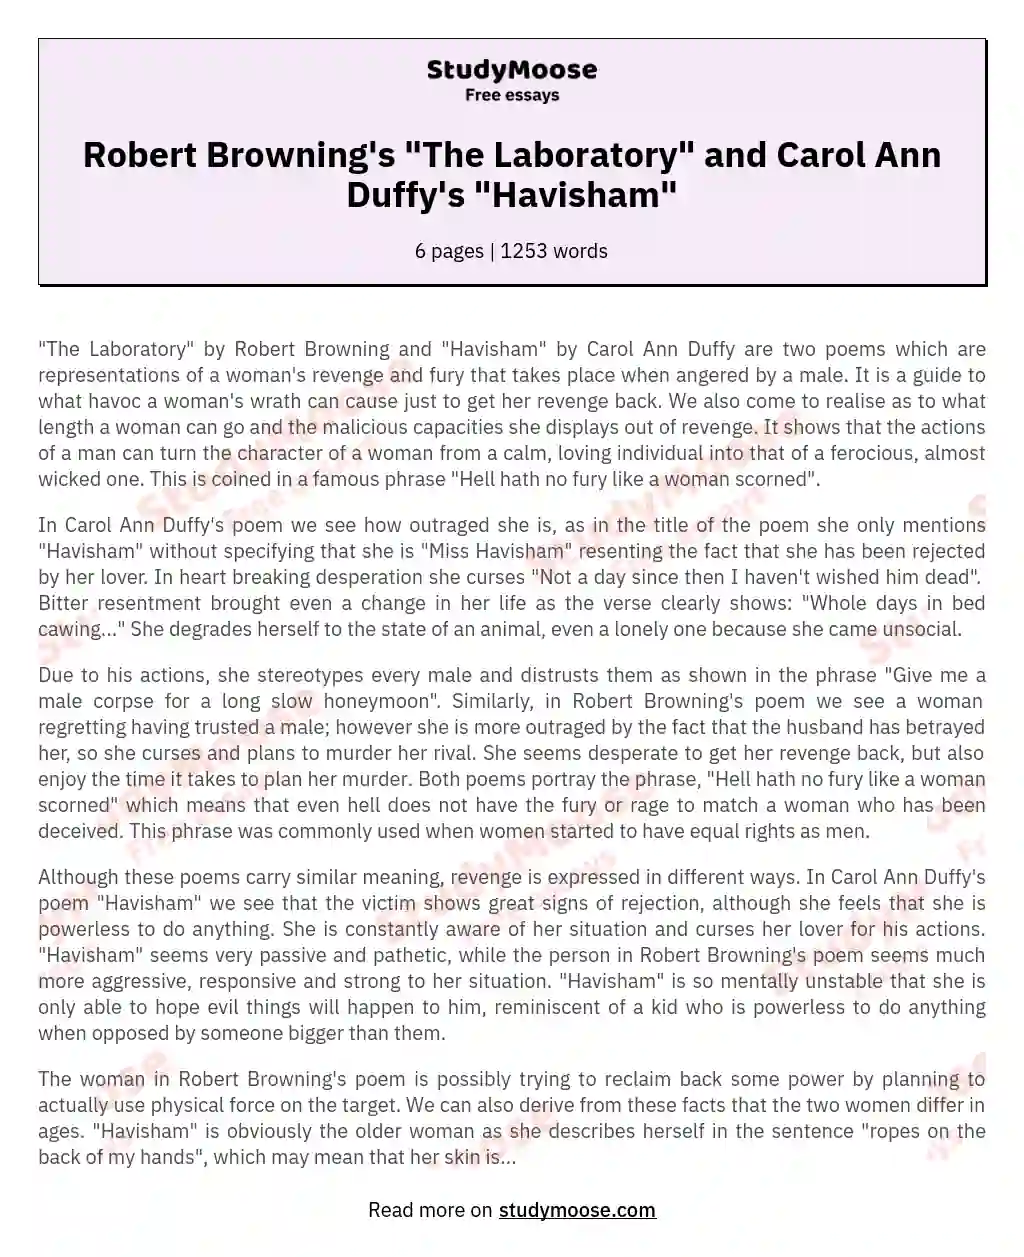 Robert Browning's "The Laboratory" and Carol Ann Duffy's "Havisham" essay